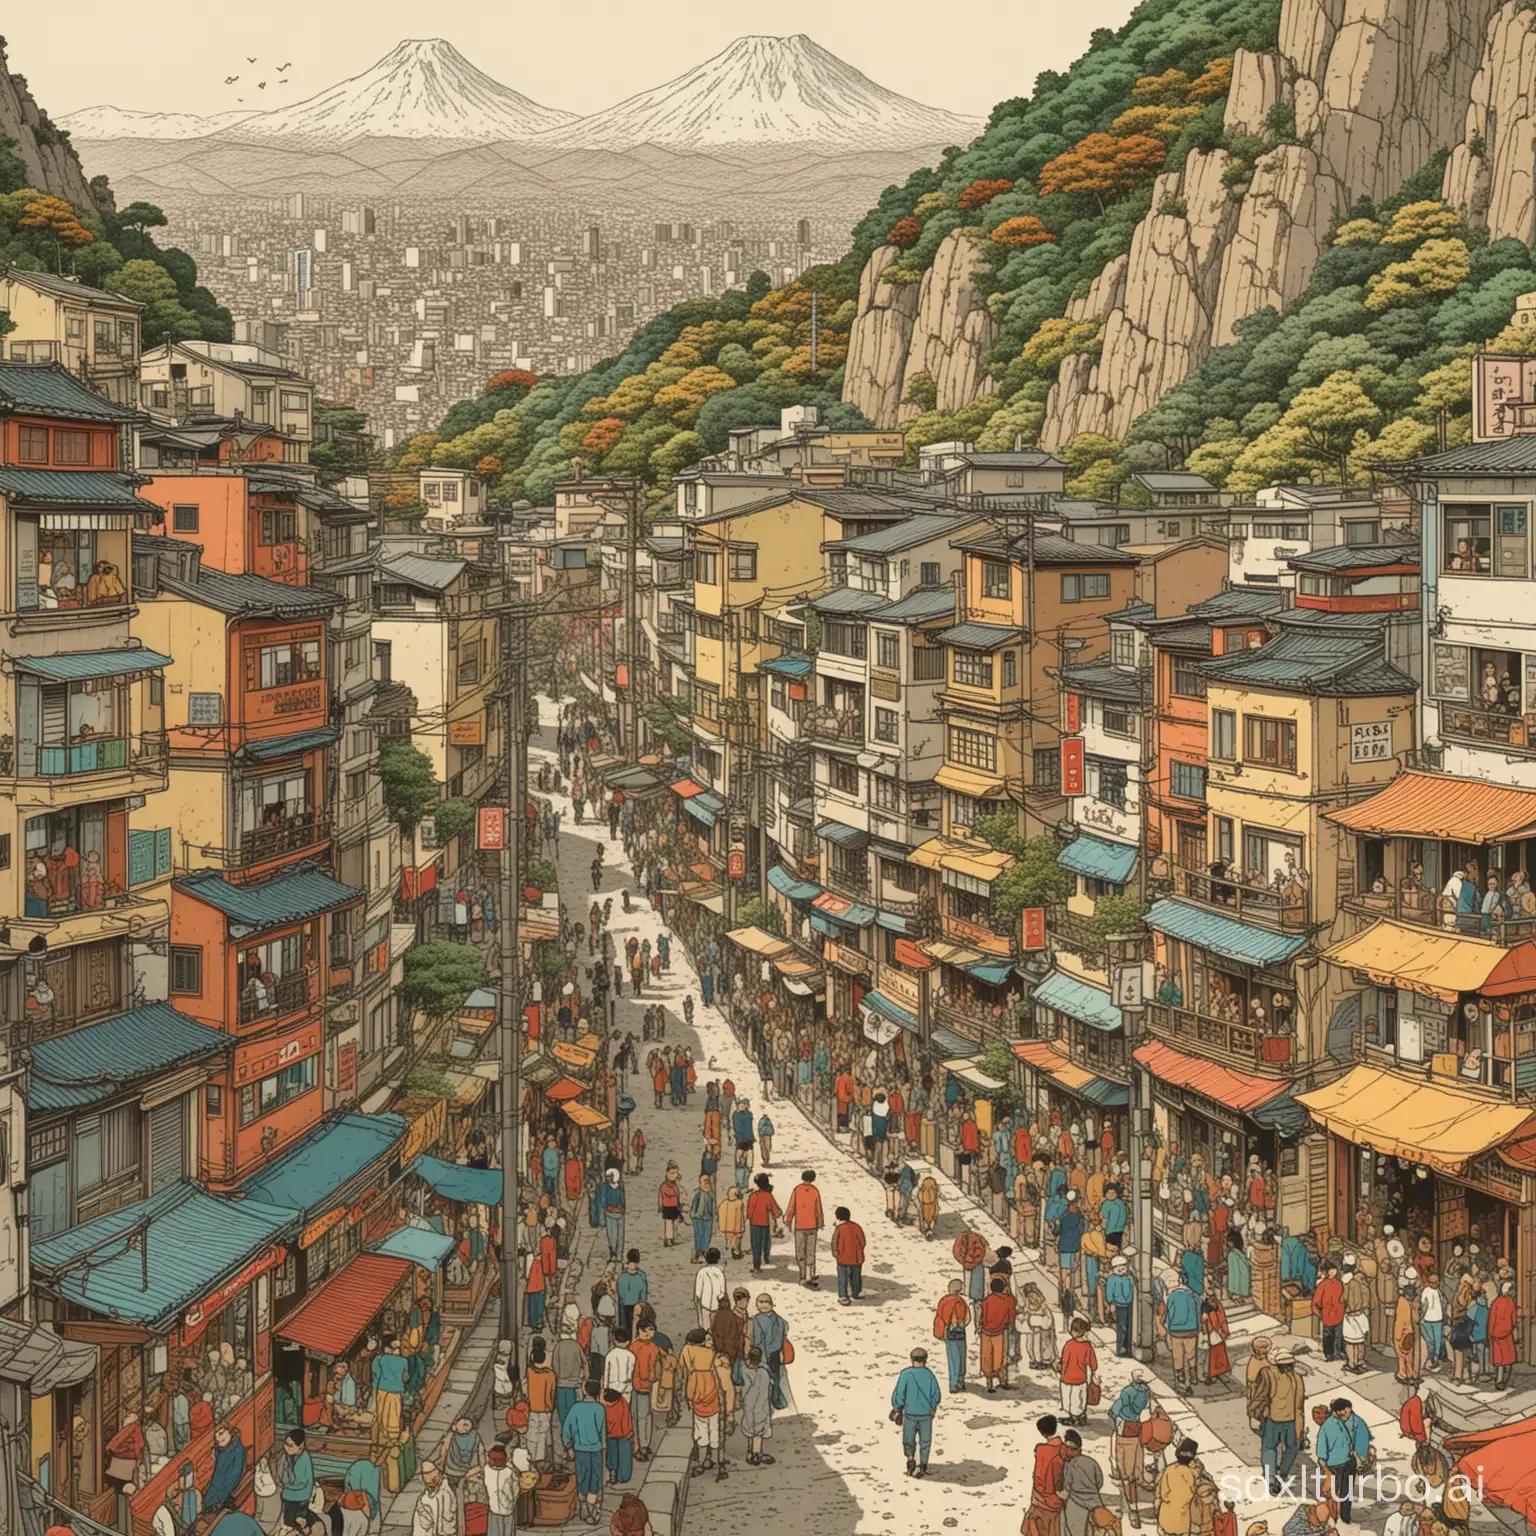 Vibrant-Pen-and-Ink-Illustration-of-Tokyo-Neighborhood-on-a-Mountain-in-Tintin-Style